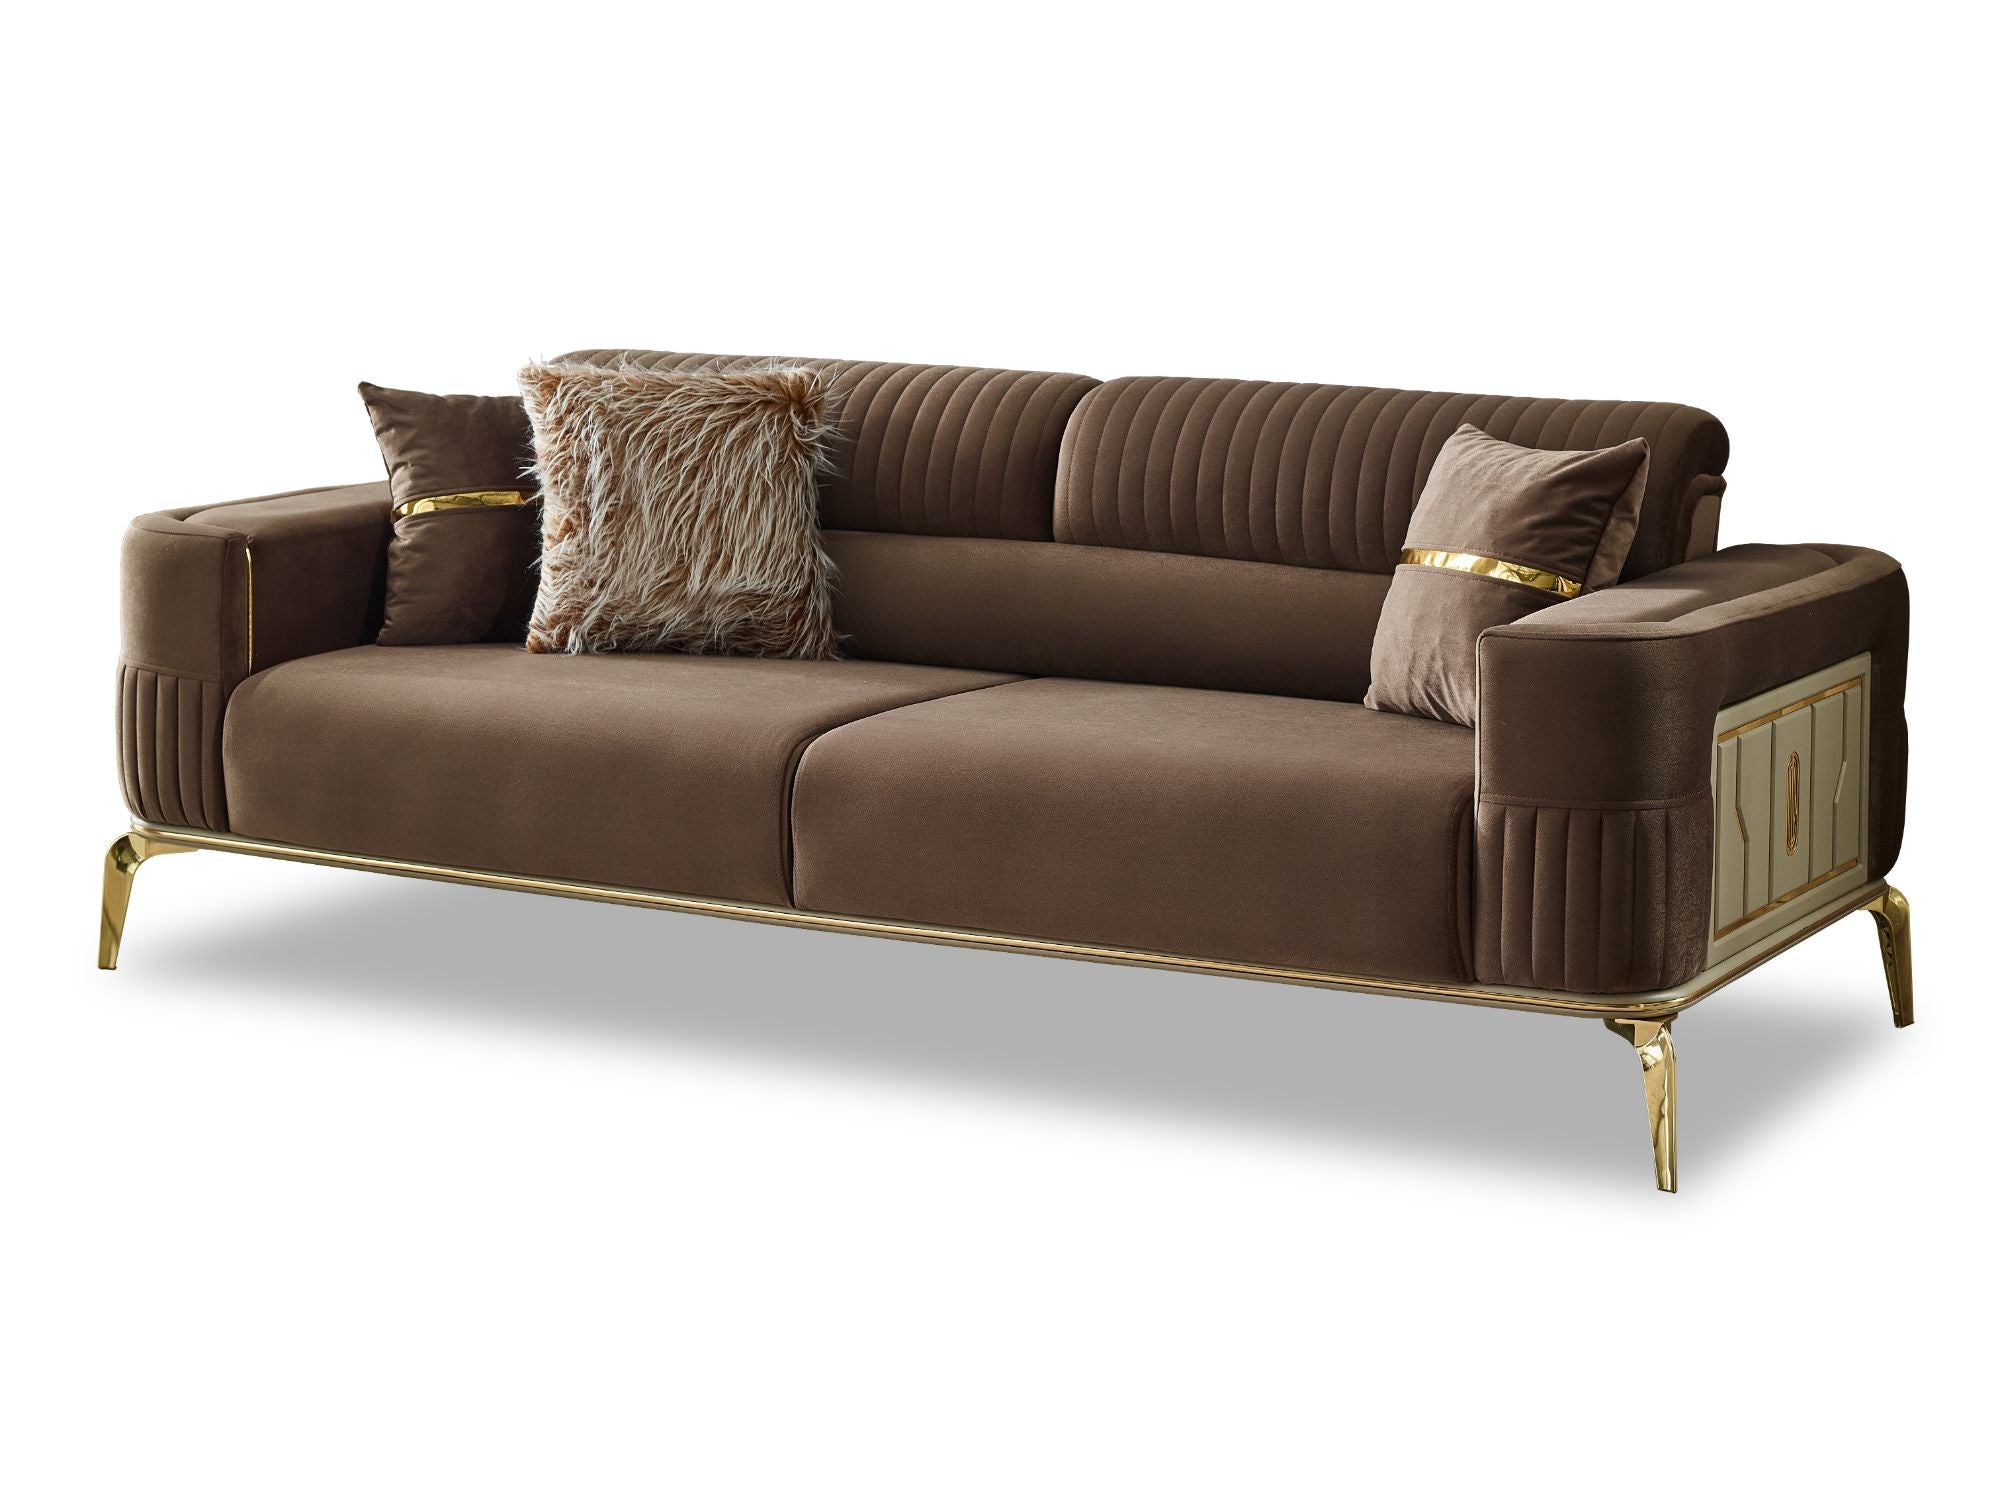 Armoni Convertible Sofa Brown With Gold Legs